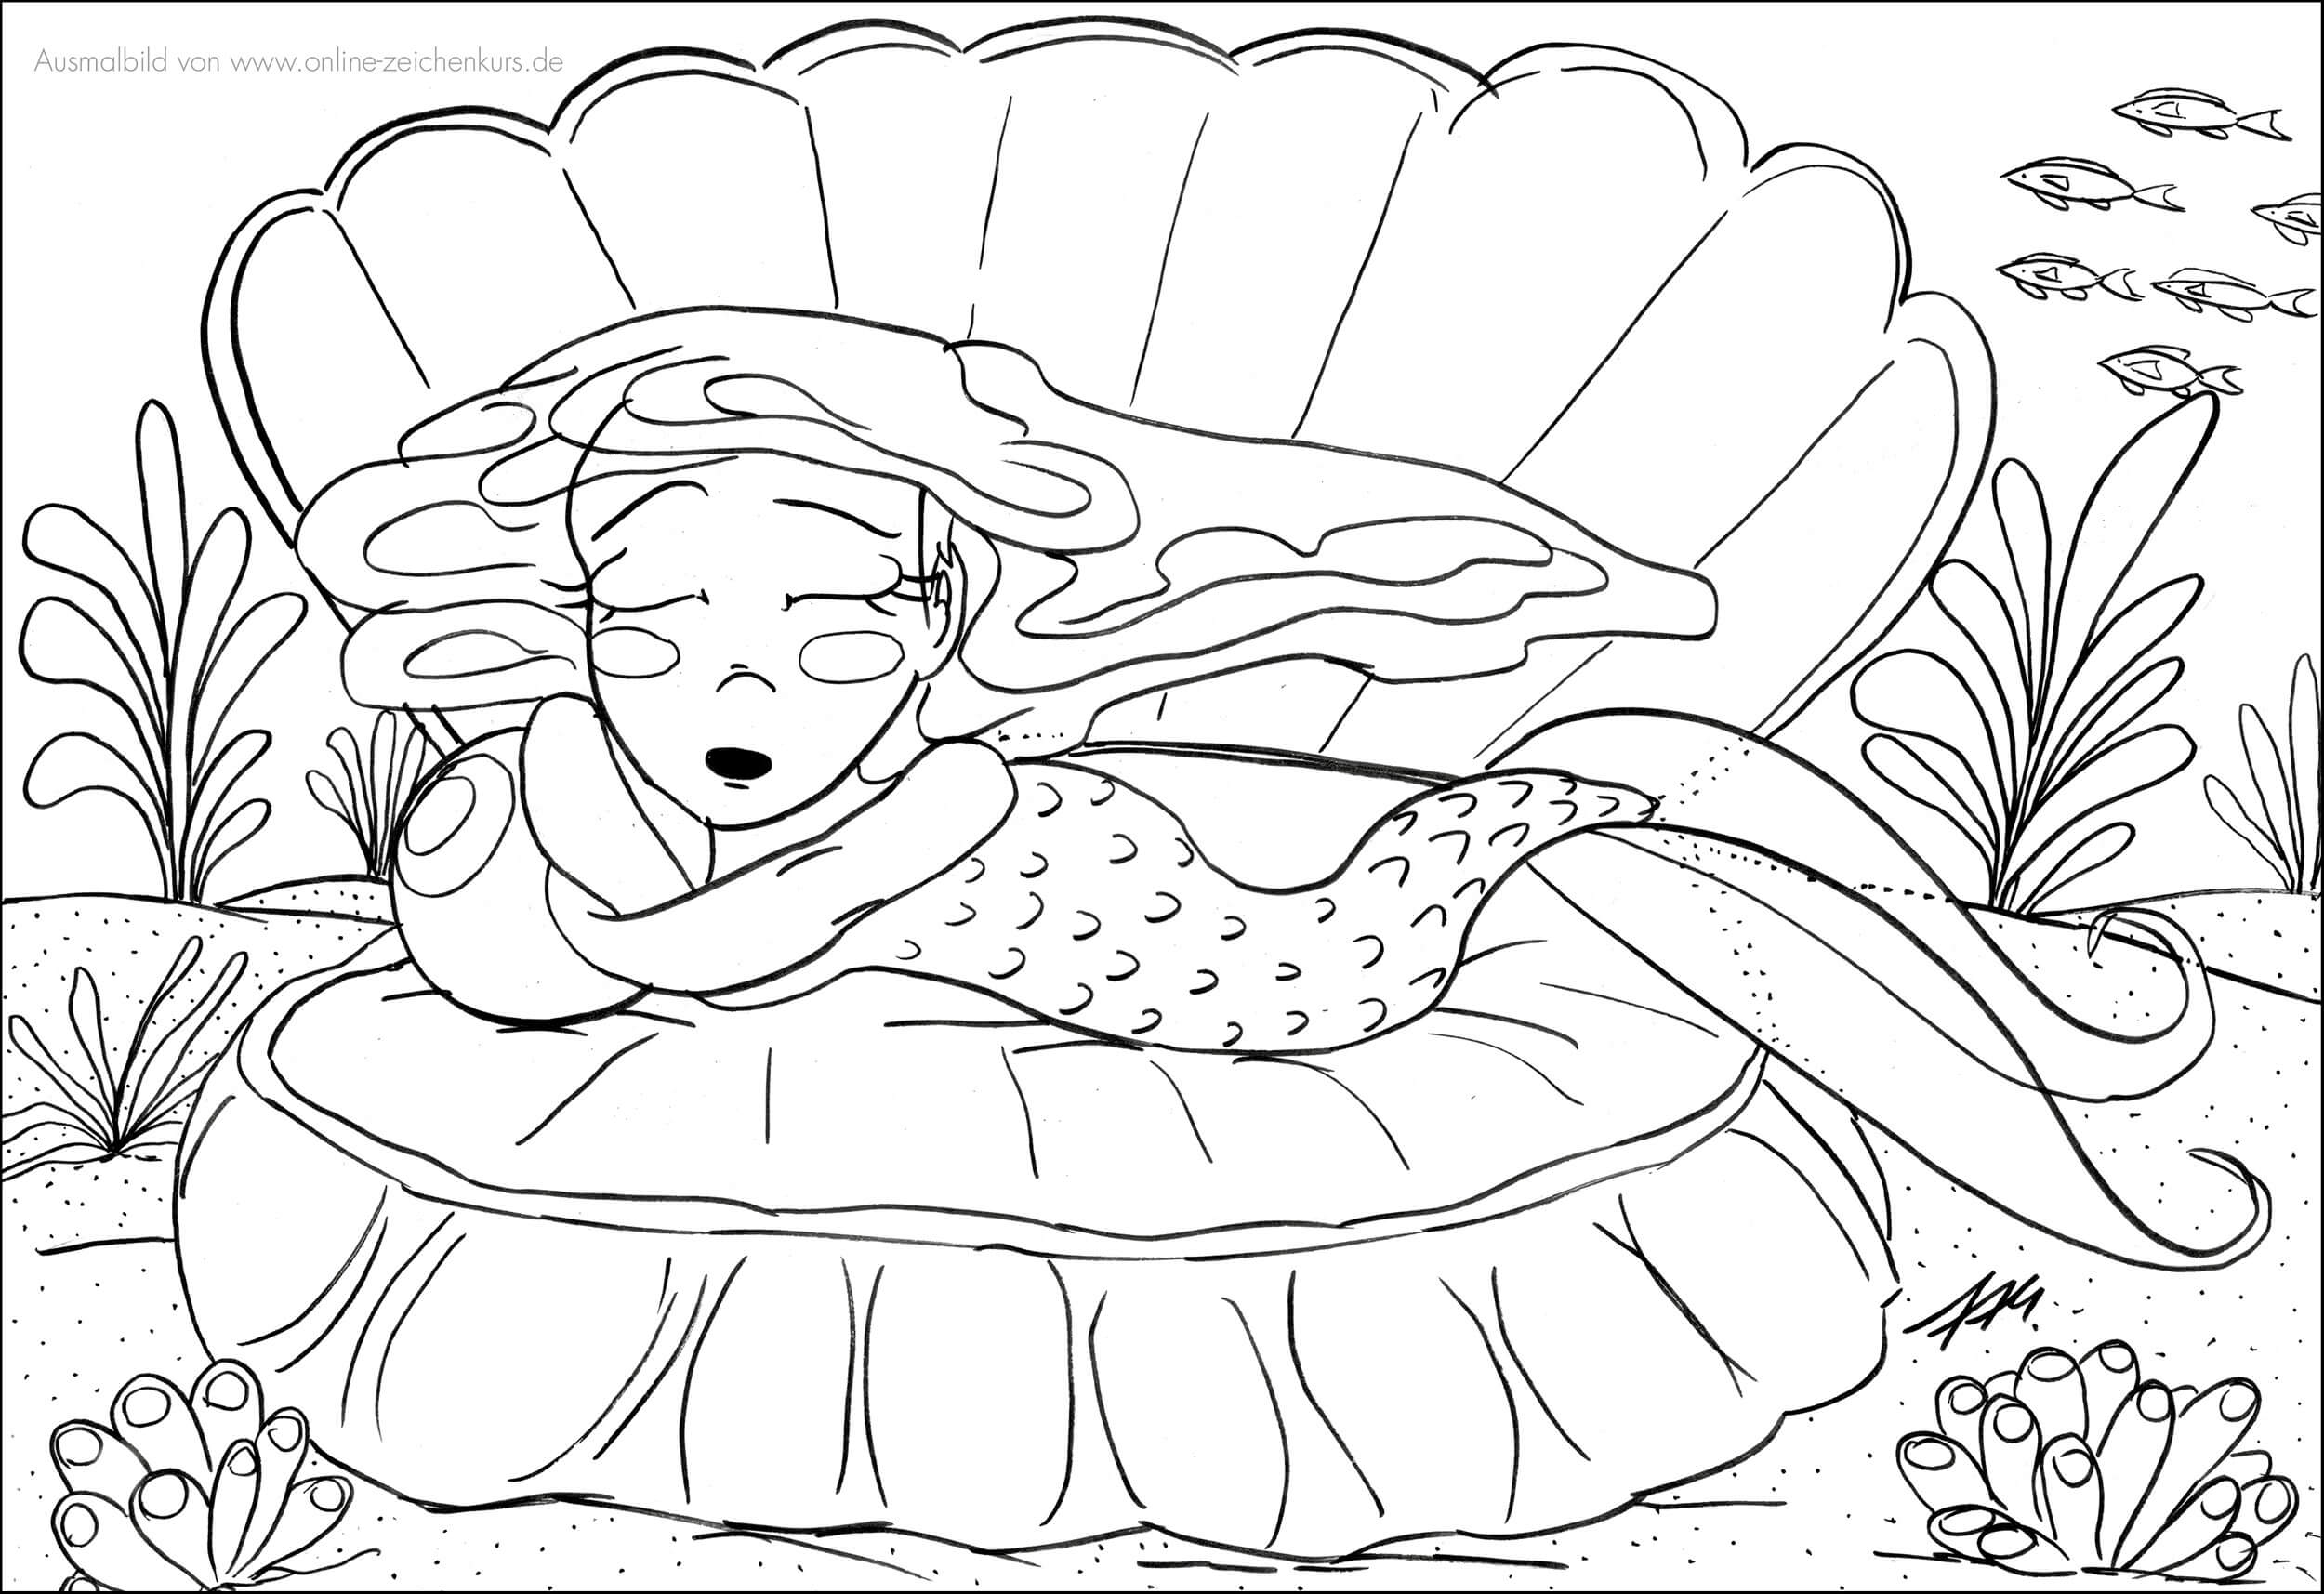 Ausmalbild: Meerjungfrau schläft in Muschel